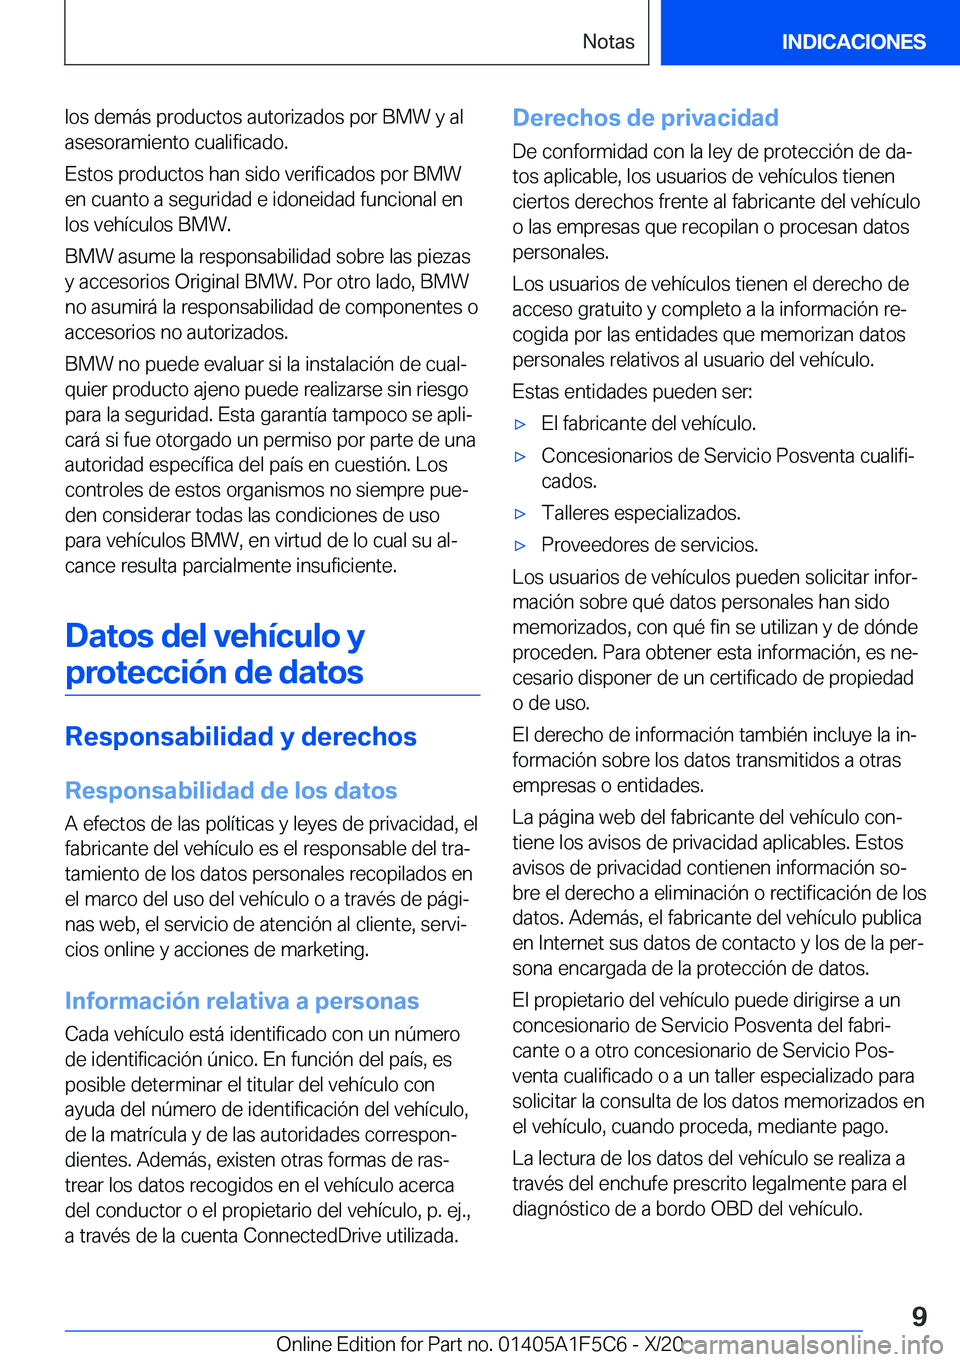 BMW X4 M 2021  Manuales de Empleo (in Spanish) �l�o�s��d�e�m�